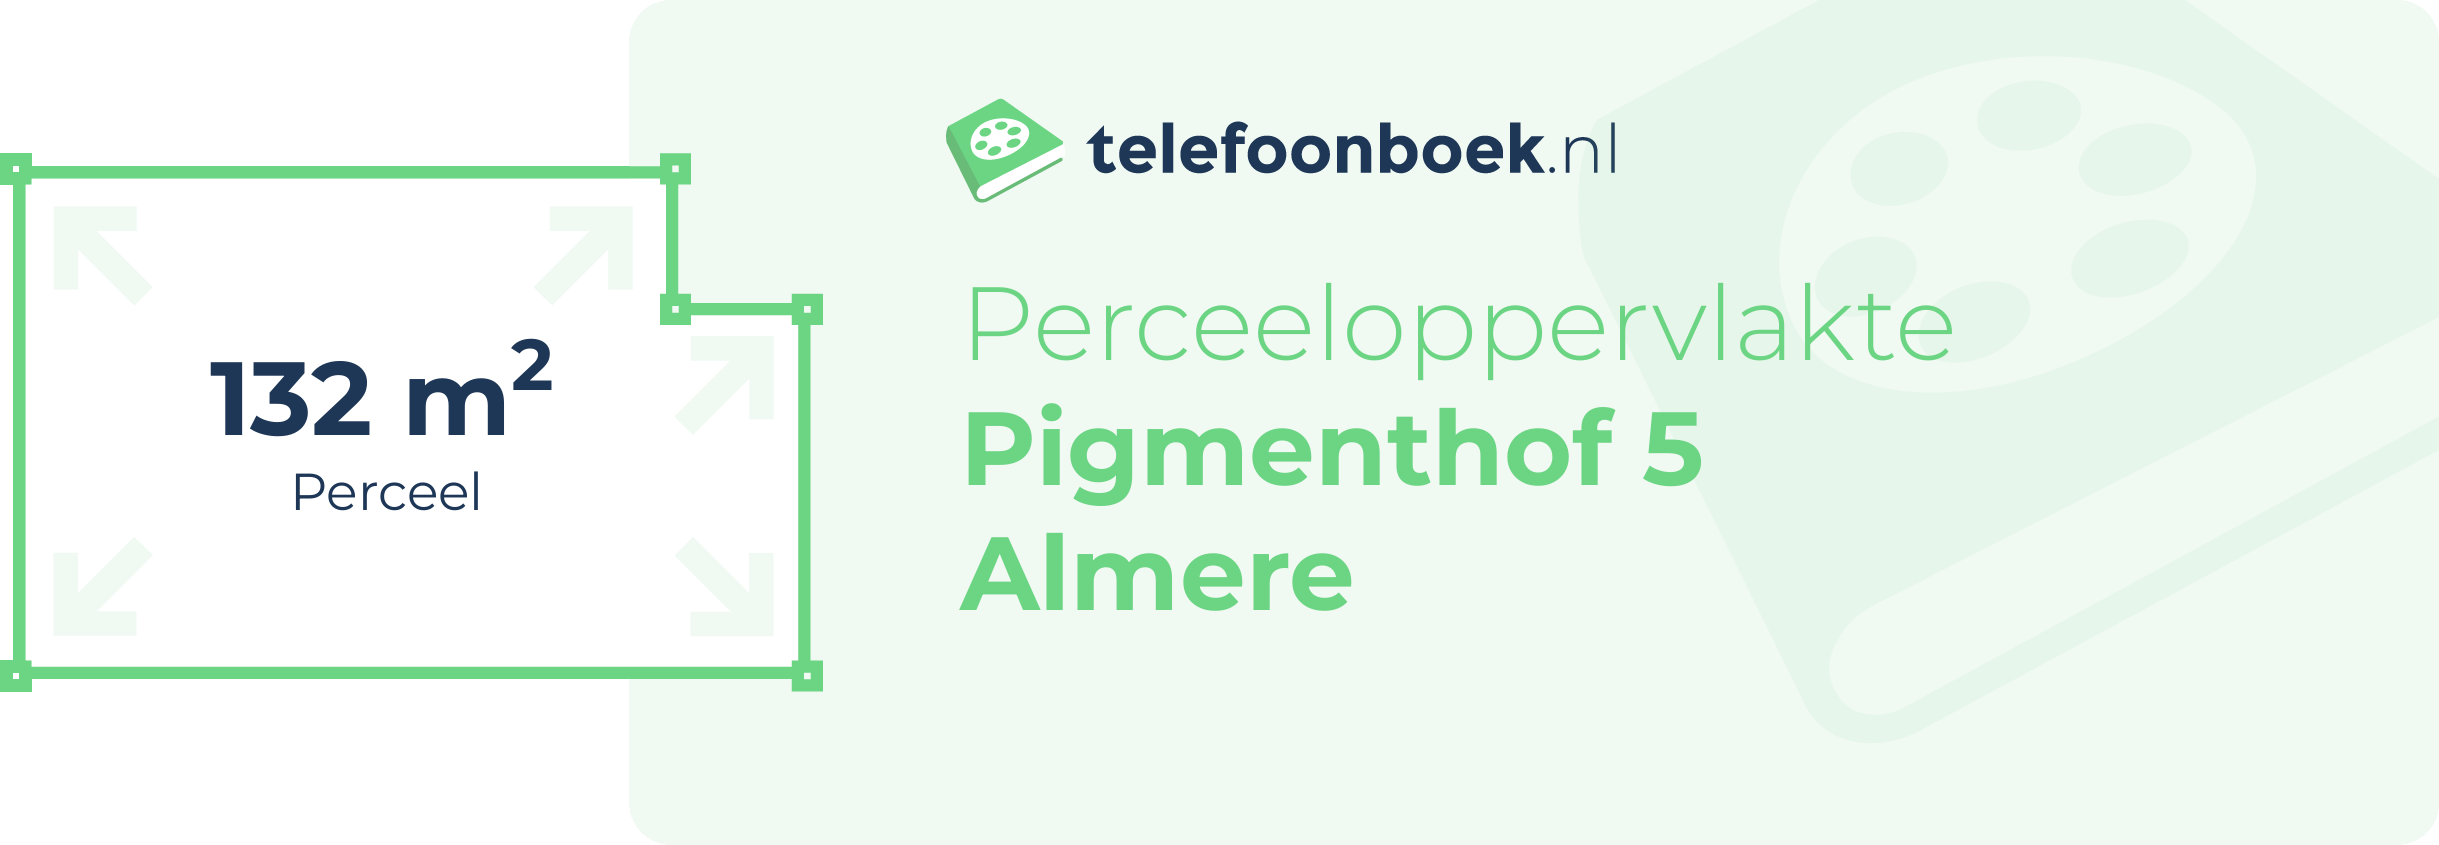 Perceeloppervlakte Pigmenthof 5 Almere